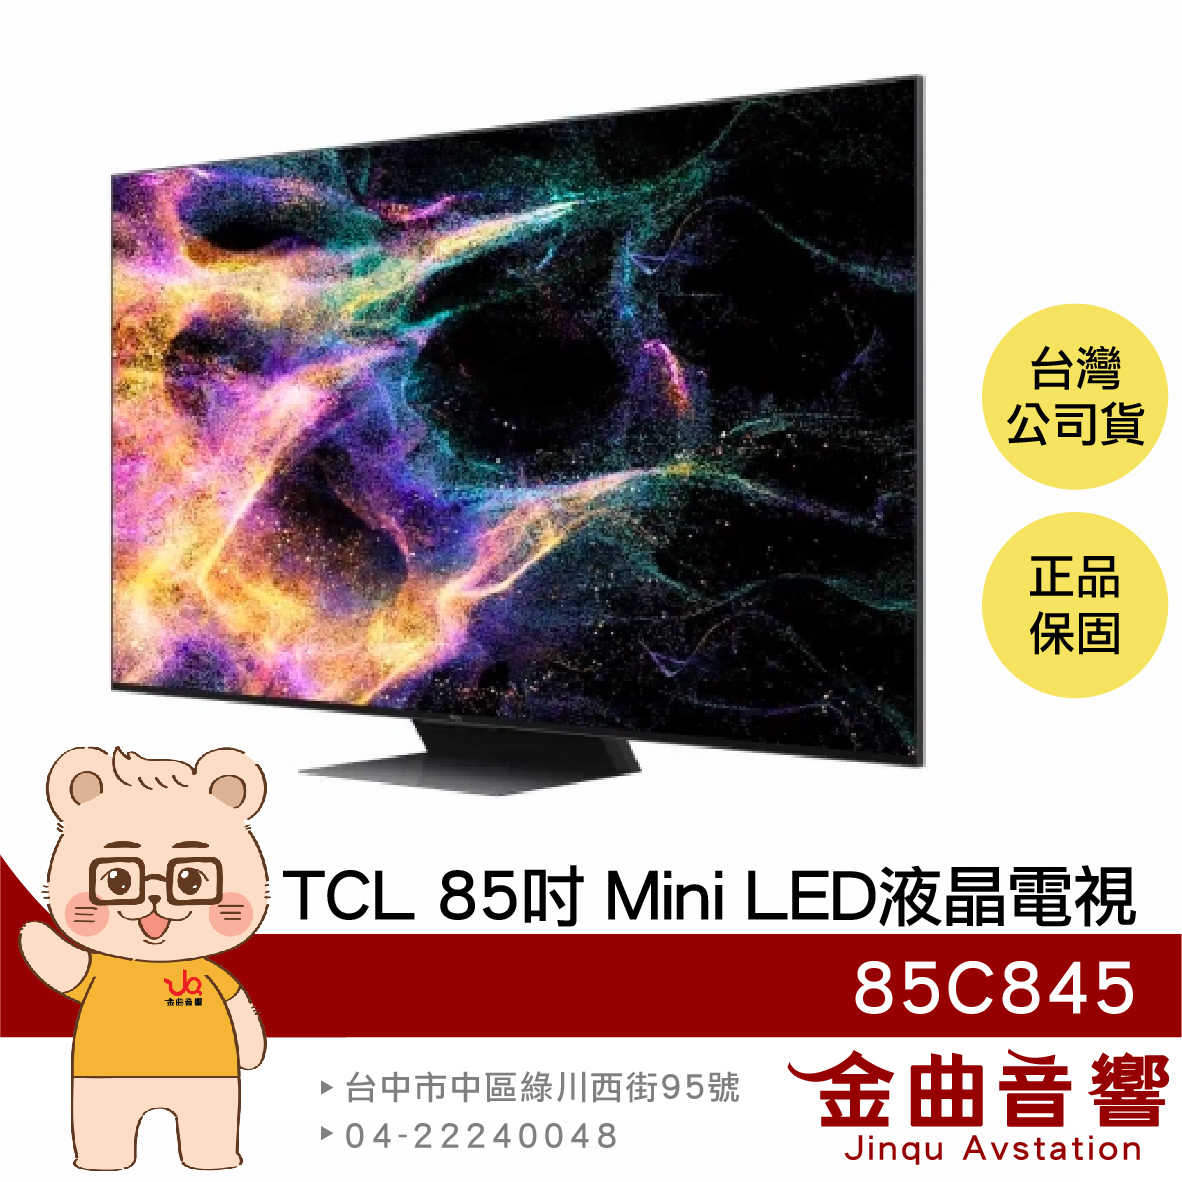 TCL 85C845 85吋 Mini LED Google TV 智能連網 顯示器 電視 | 金曲音響